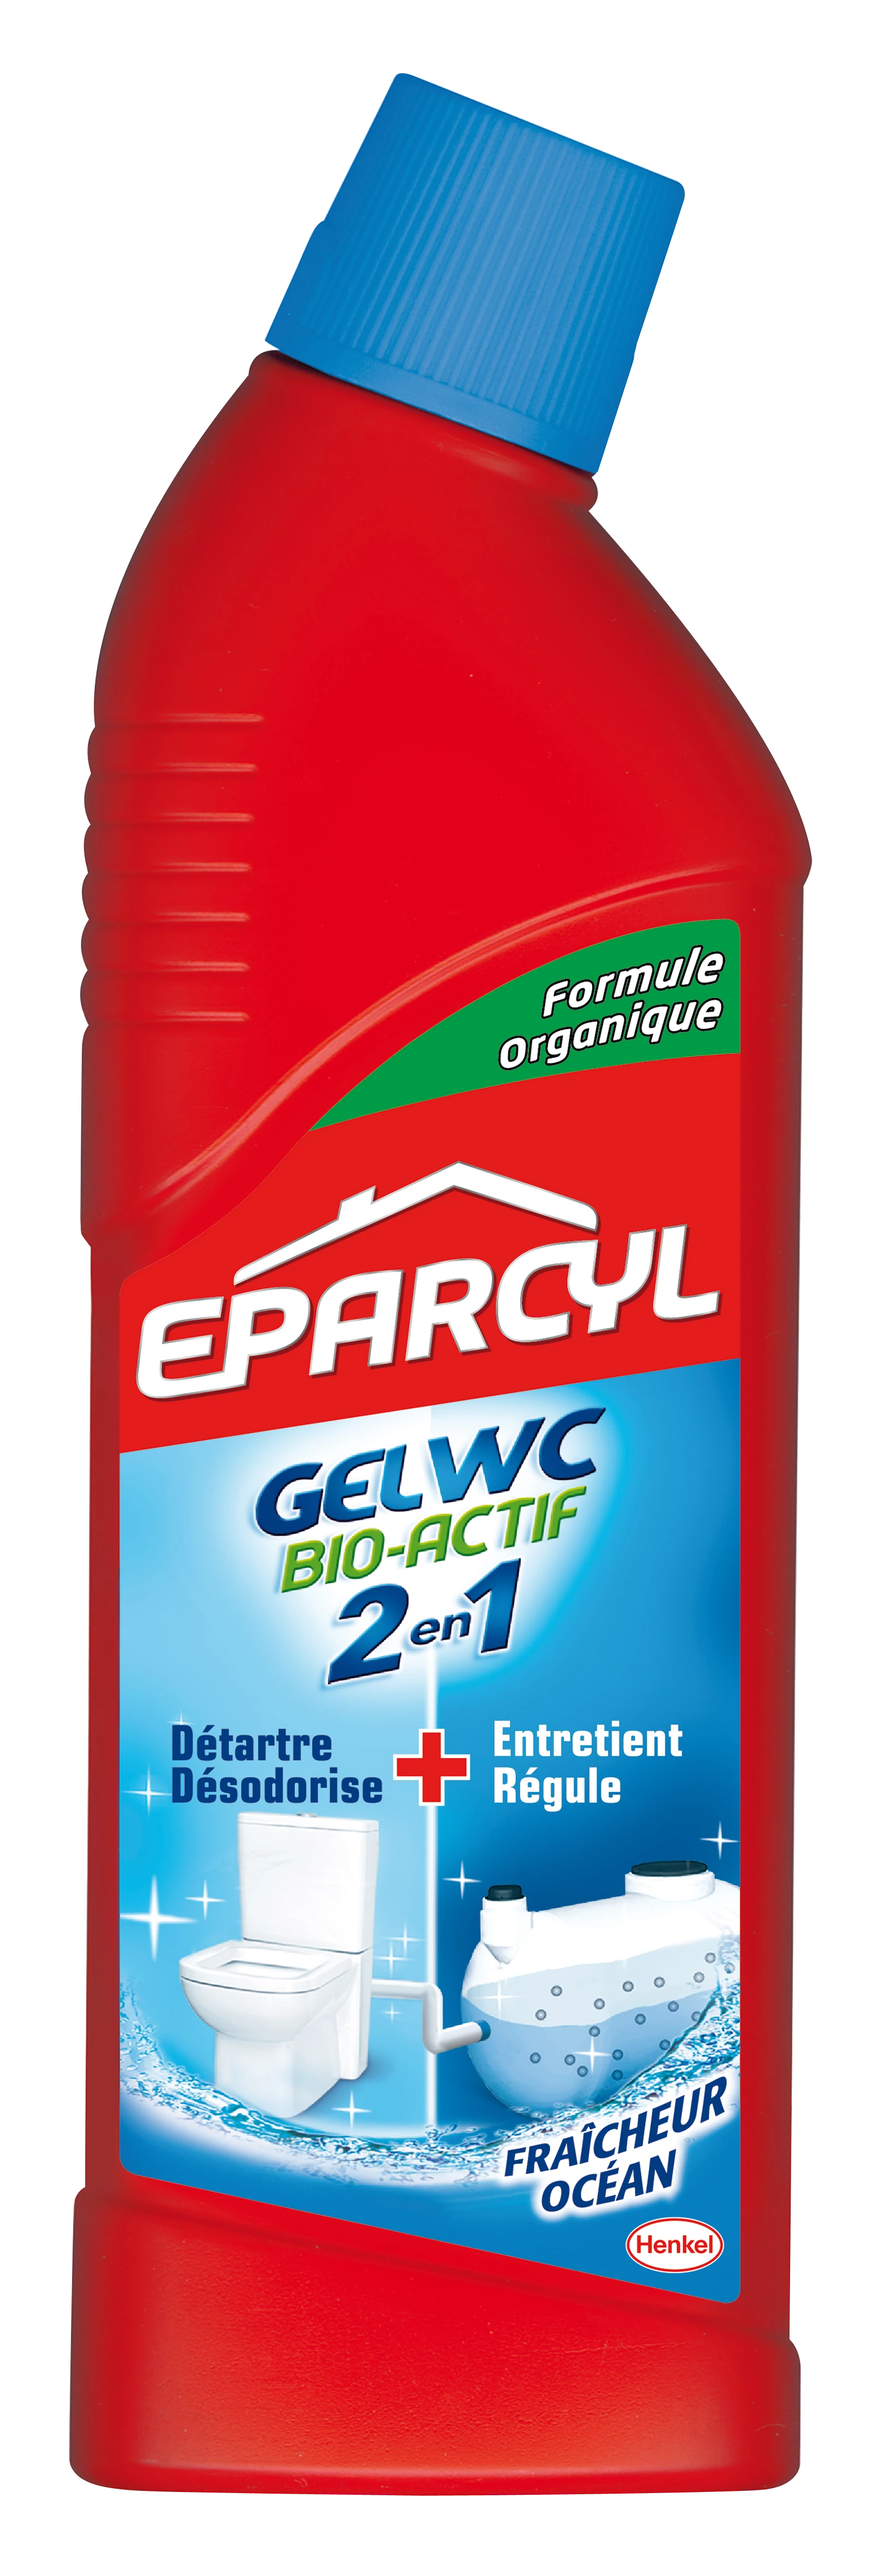 Bio-actif 2en1 马桶凝胶 750ml - EPARCYL